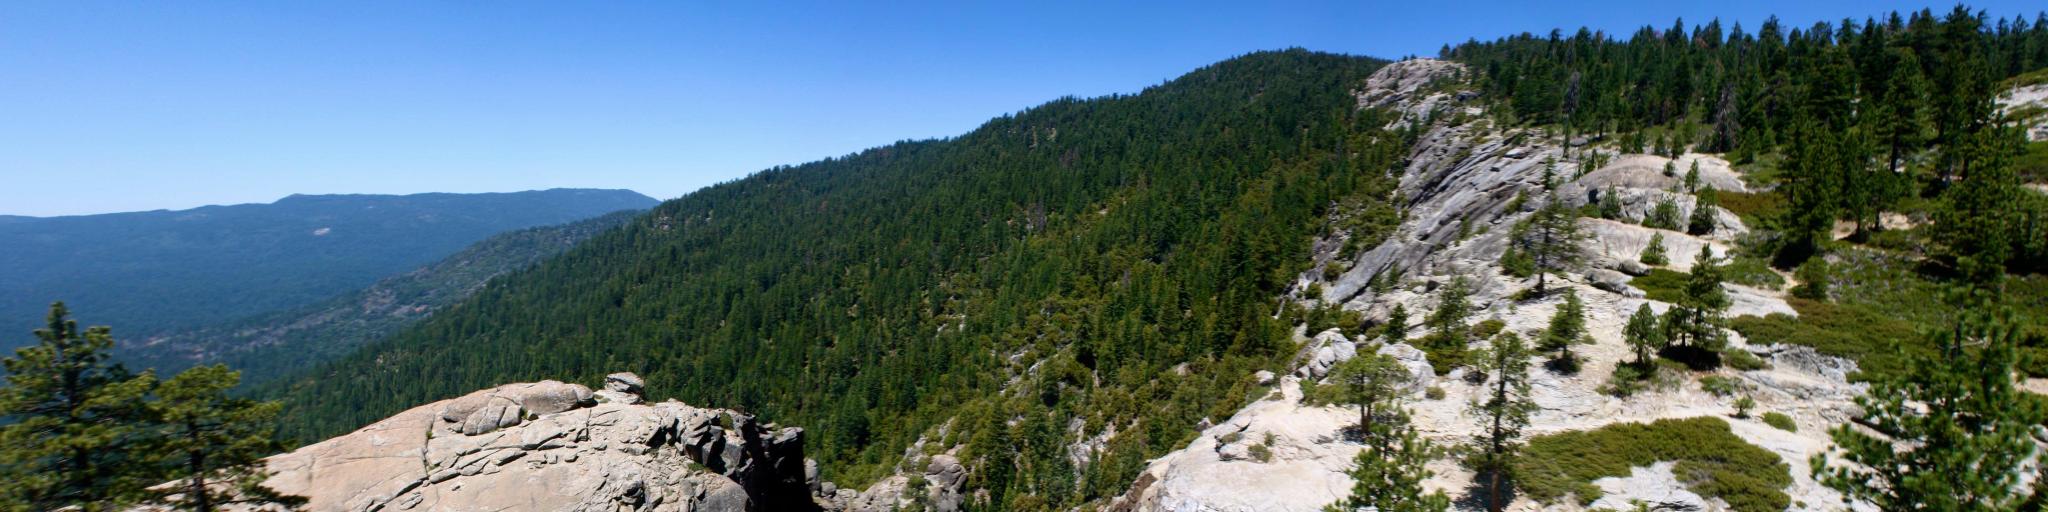 Winding rockface and dense forests along Chilnualna Falls Hike in Yosemite National Park 